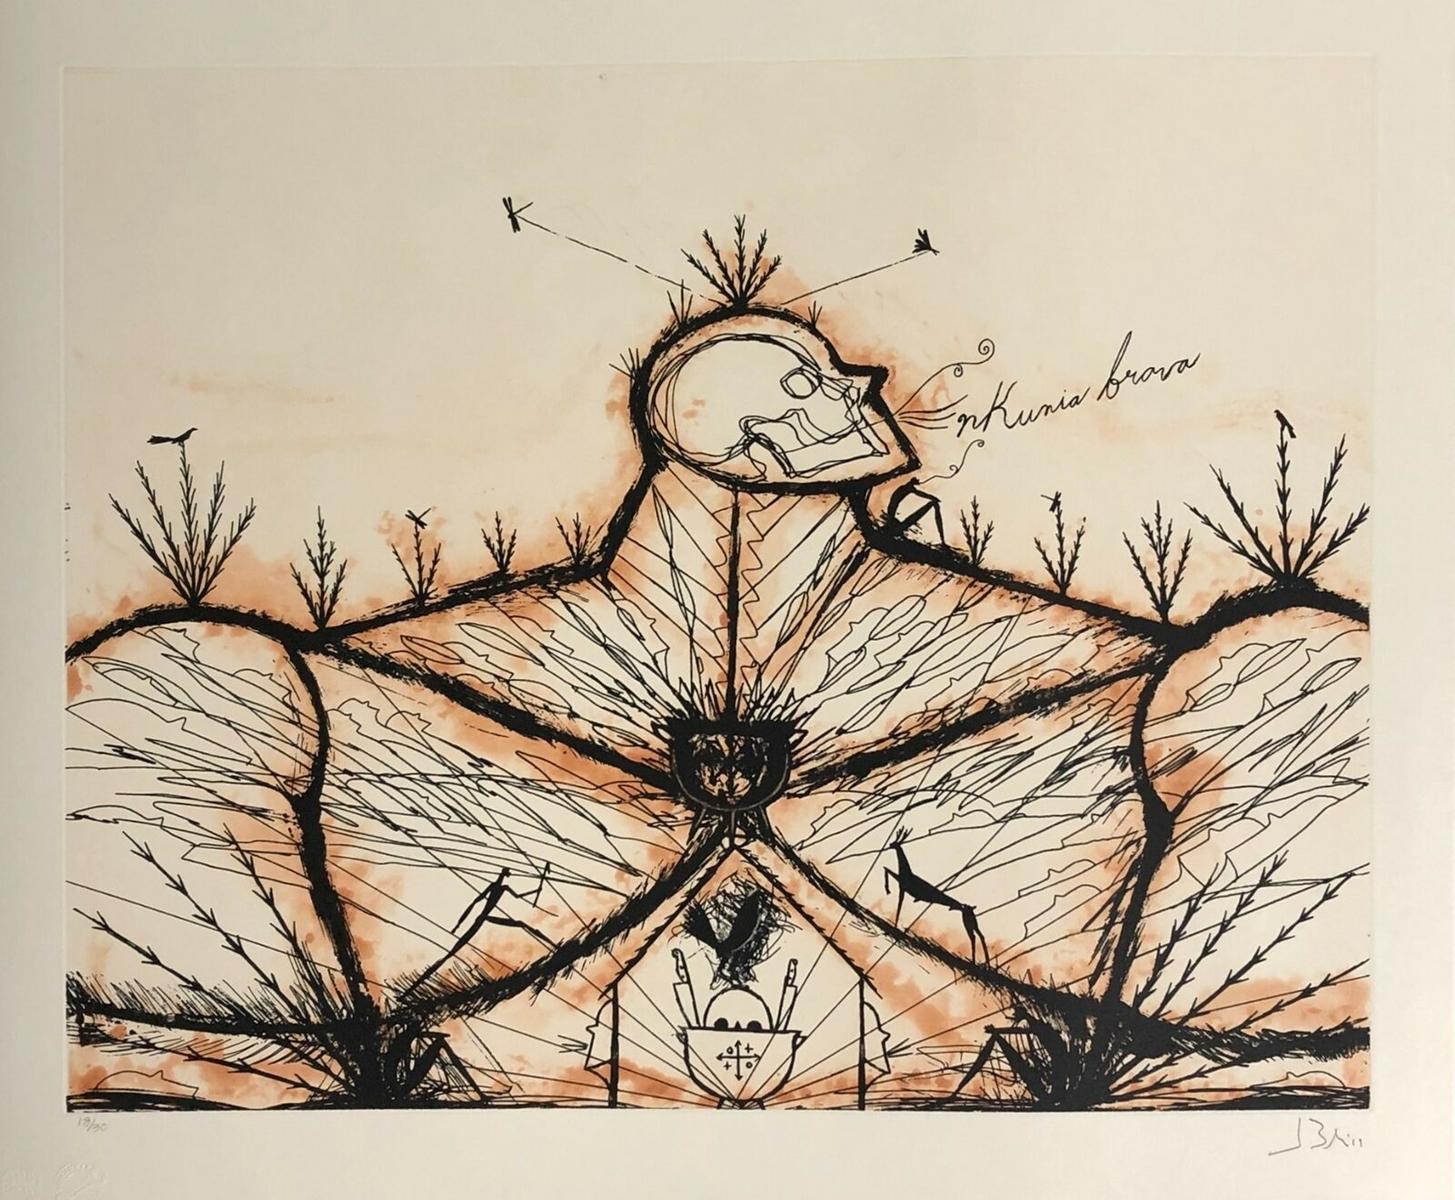 Jose Bedia (Cuba, 1959)
'Nkunia Brava', 2019
etching, aquatint on paper Deponte 300 g.
25.4 x 33.7 in. (64.5 x 85.5 cm.)
Edition of 30
Unframed


